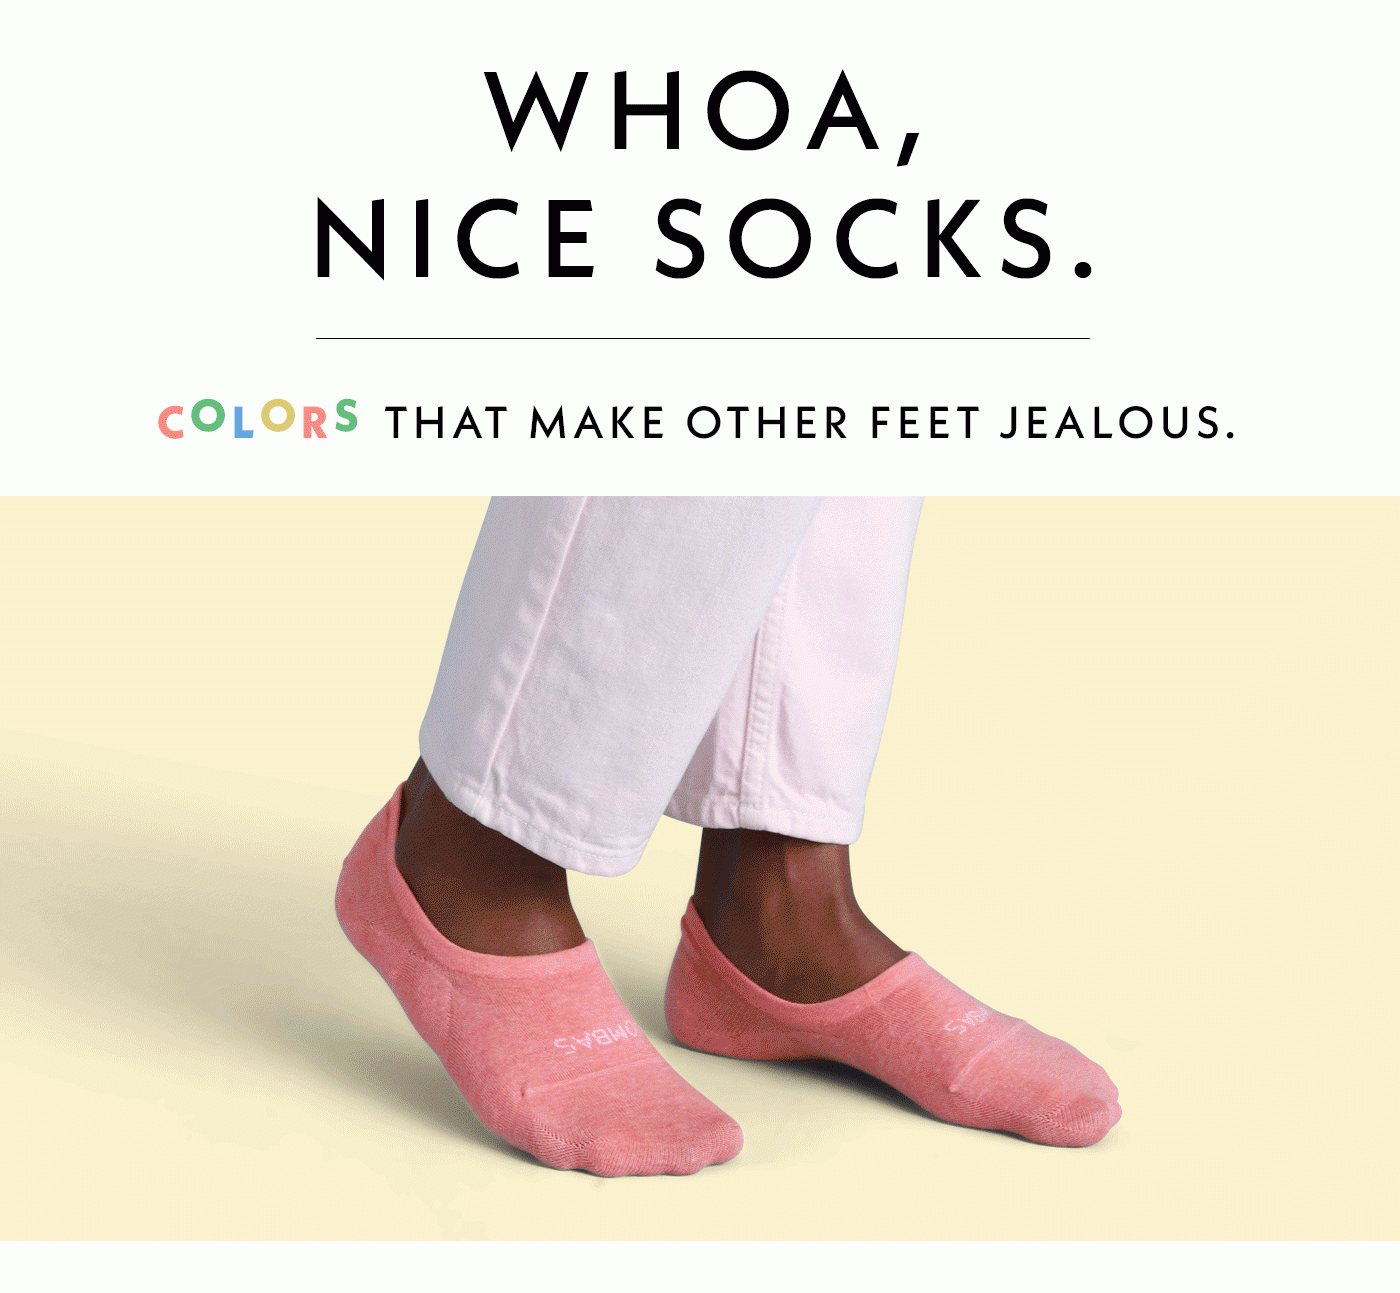 Whoa, nice socks. Colors that make other feet jealous.